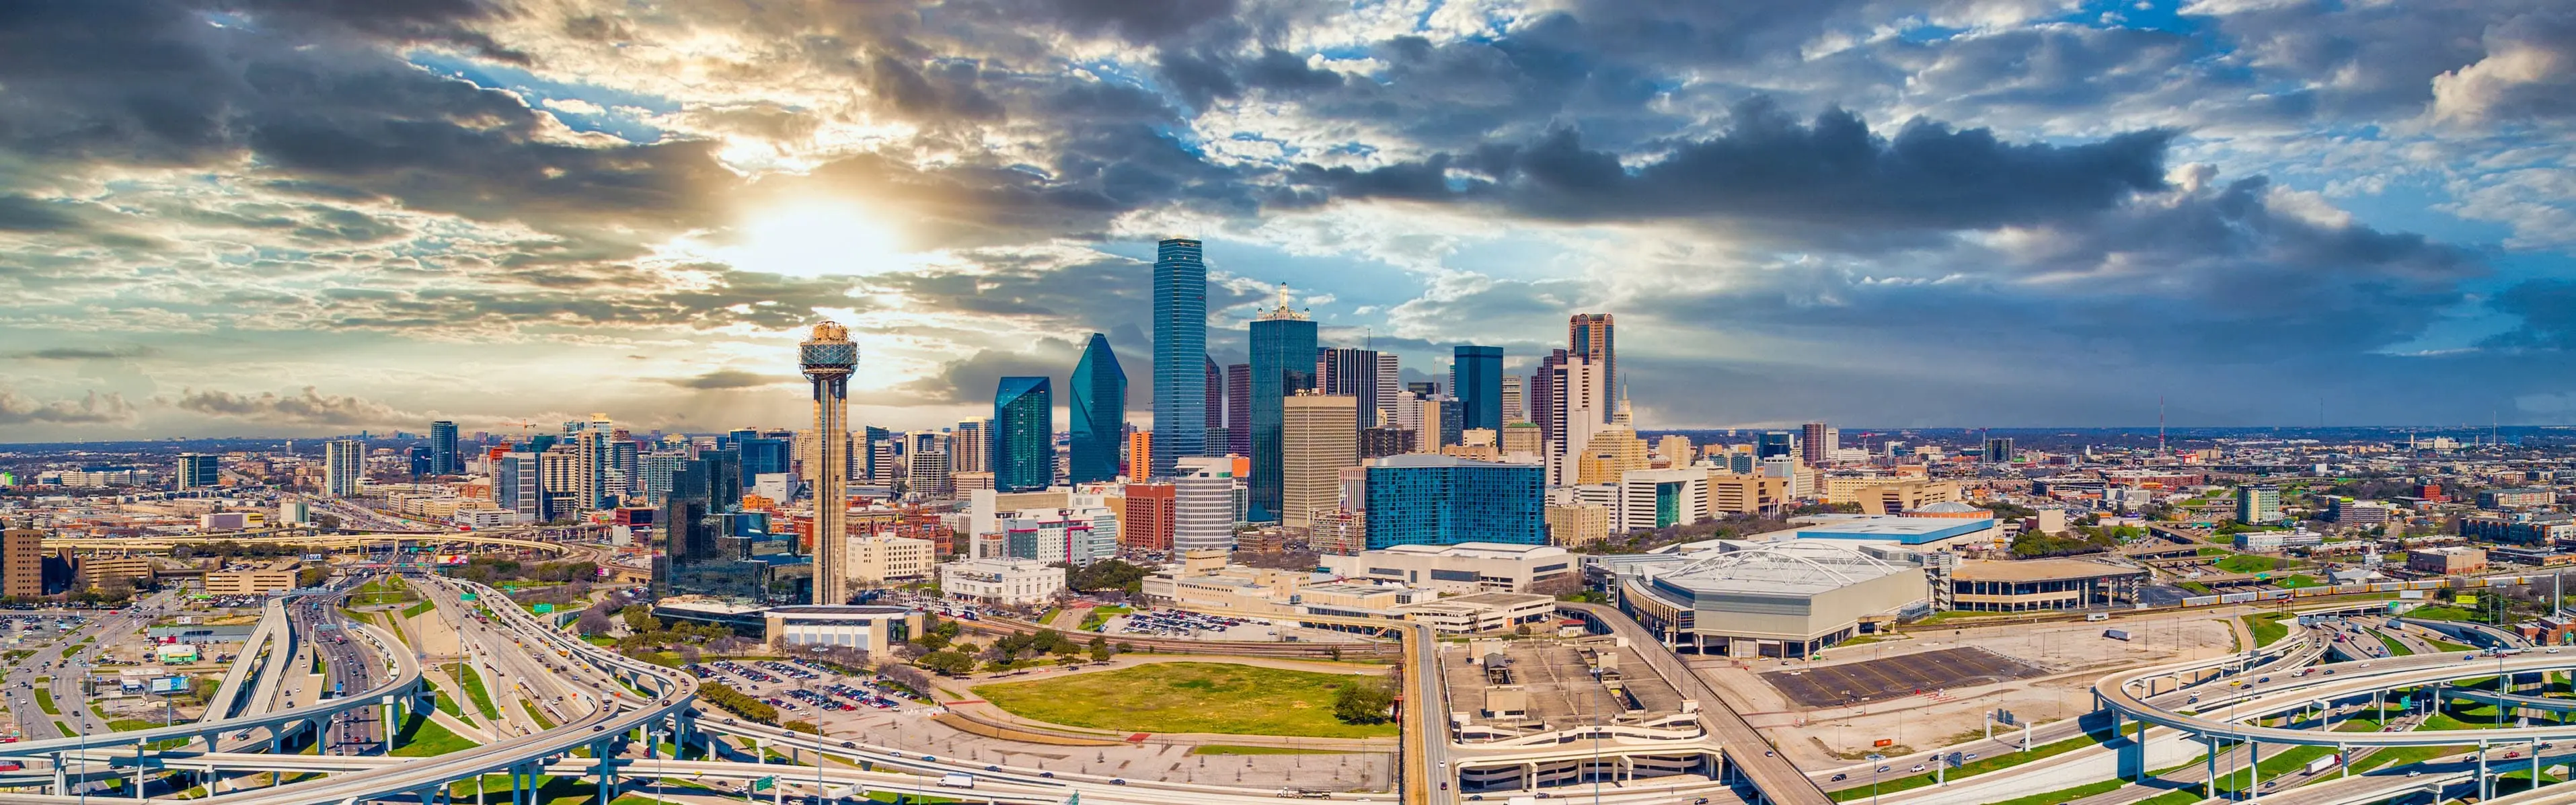 Downtown Dallas, TX Real Estate, Homes & Condos For Sale